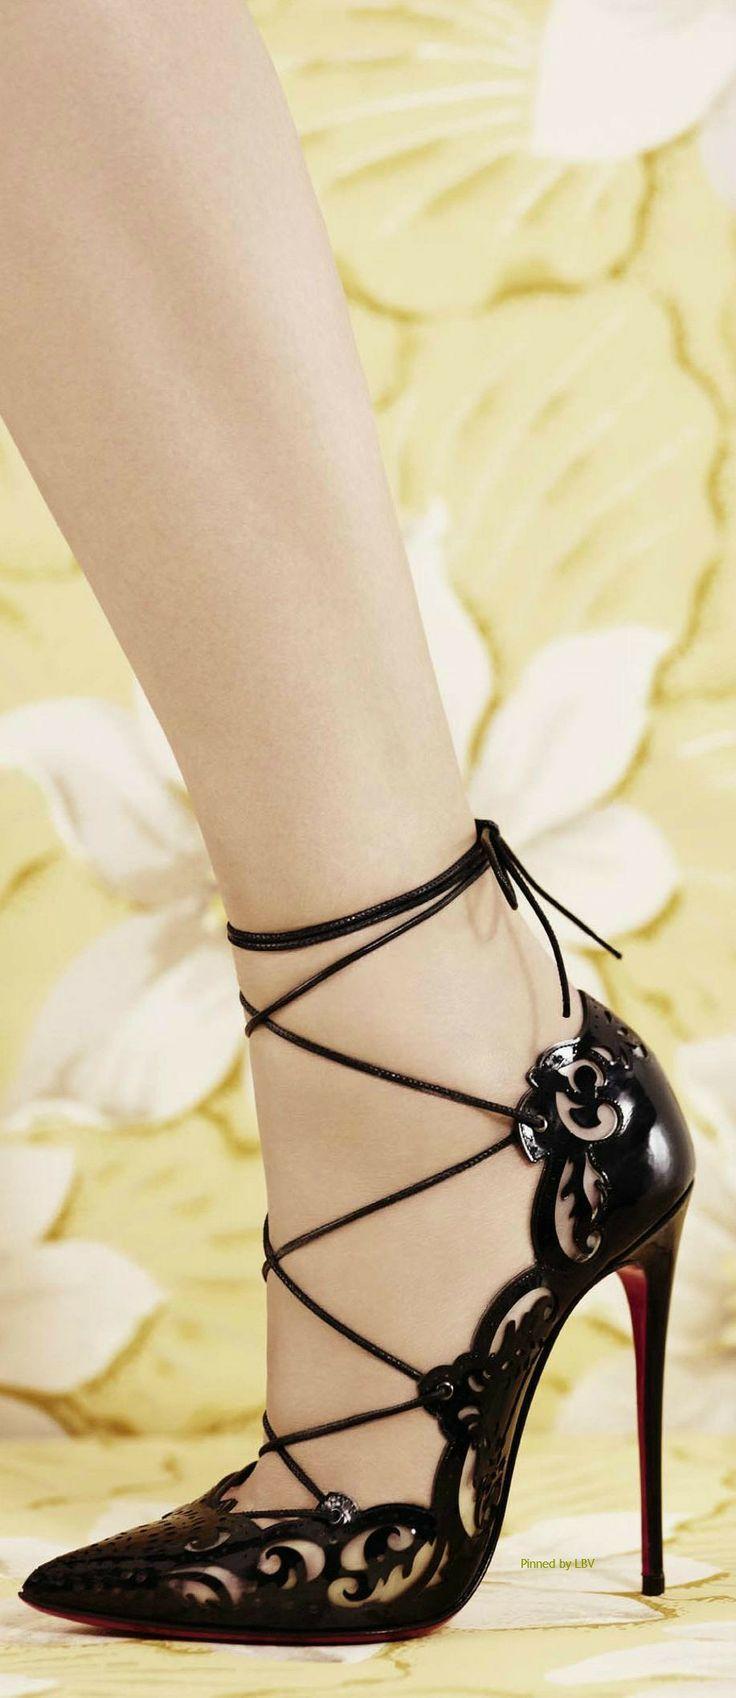 Wedding - Christian Louboutin Black Lace-Up Sandal Spring 2014